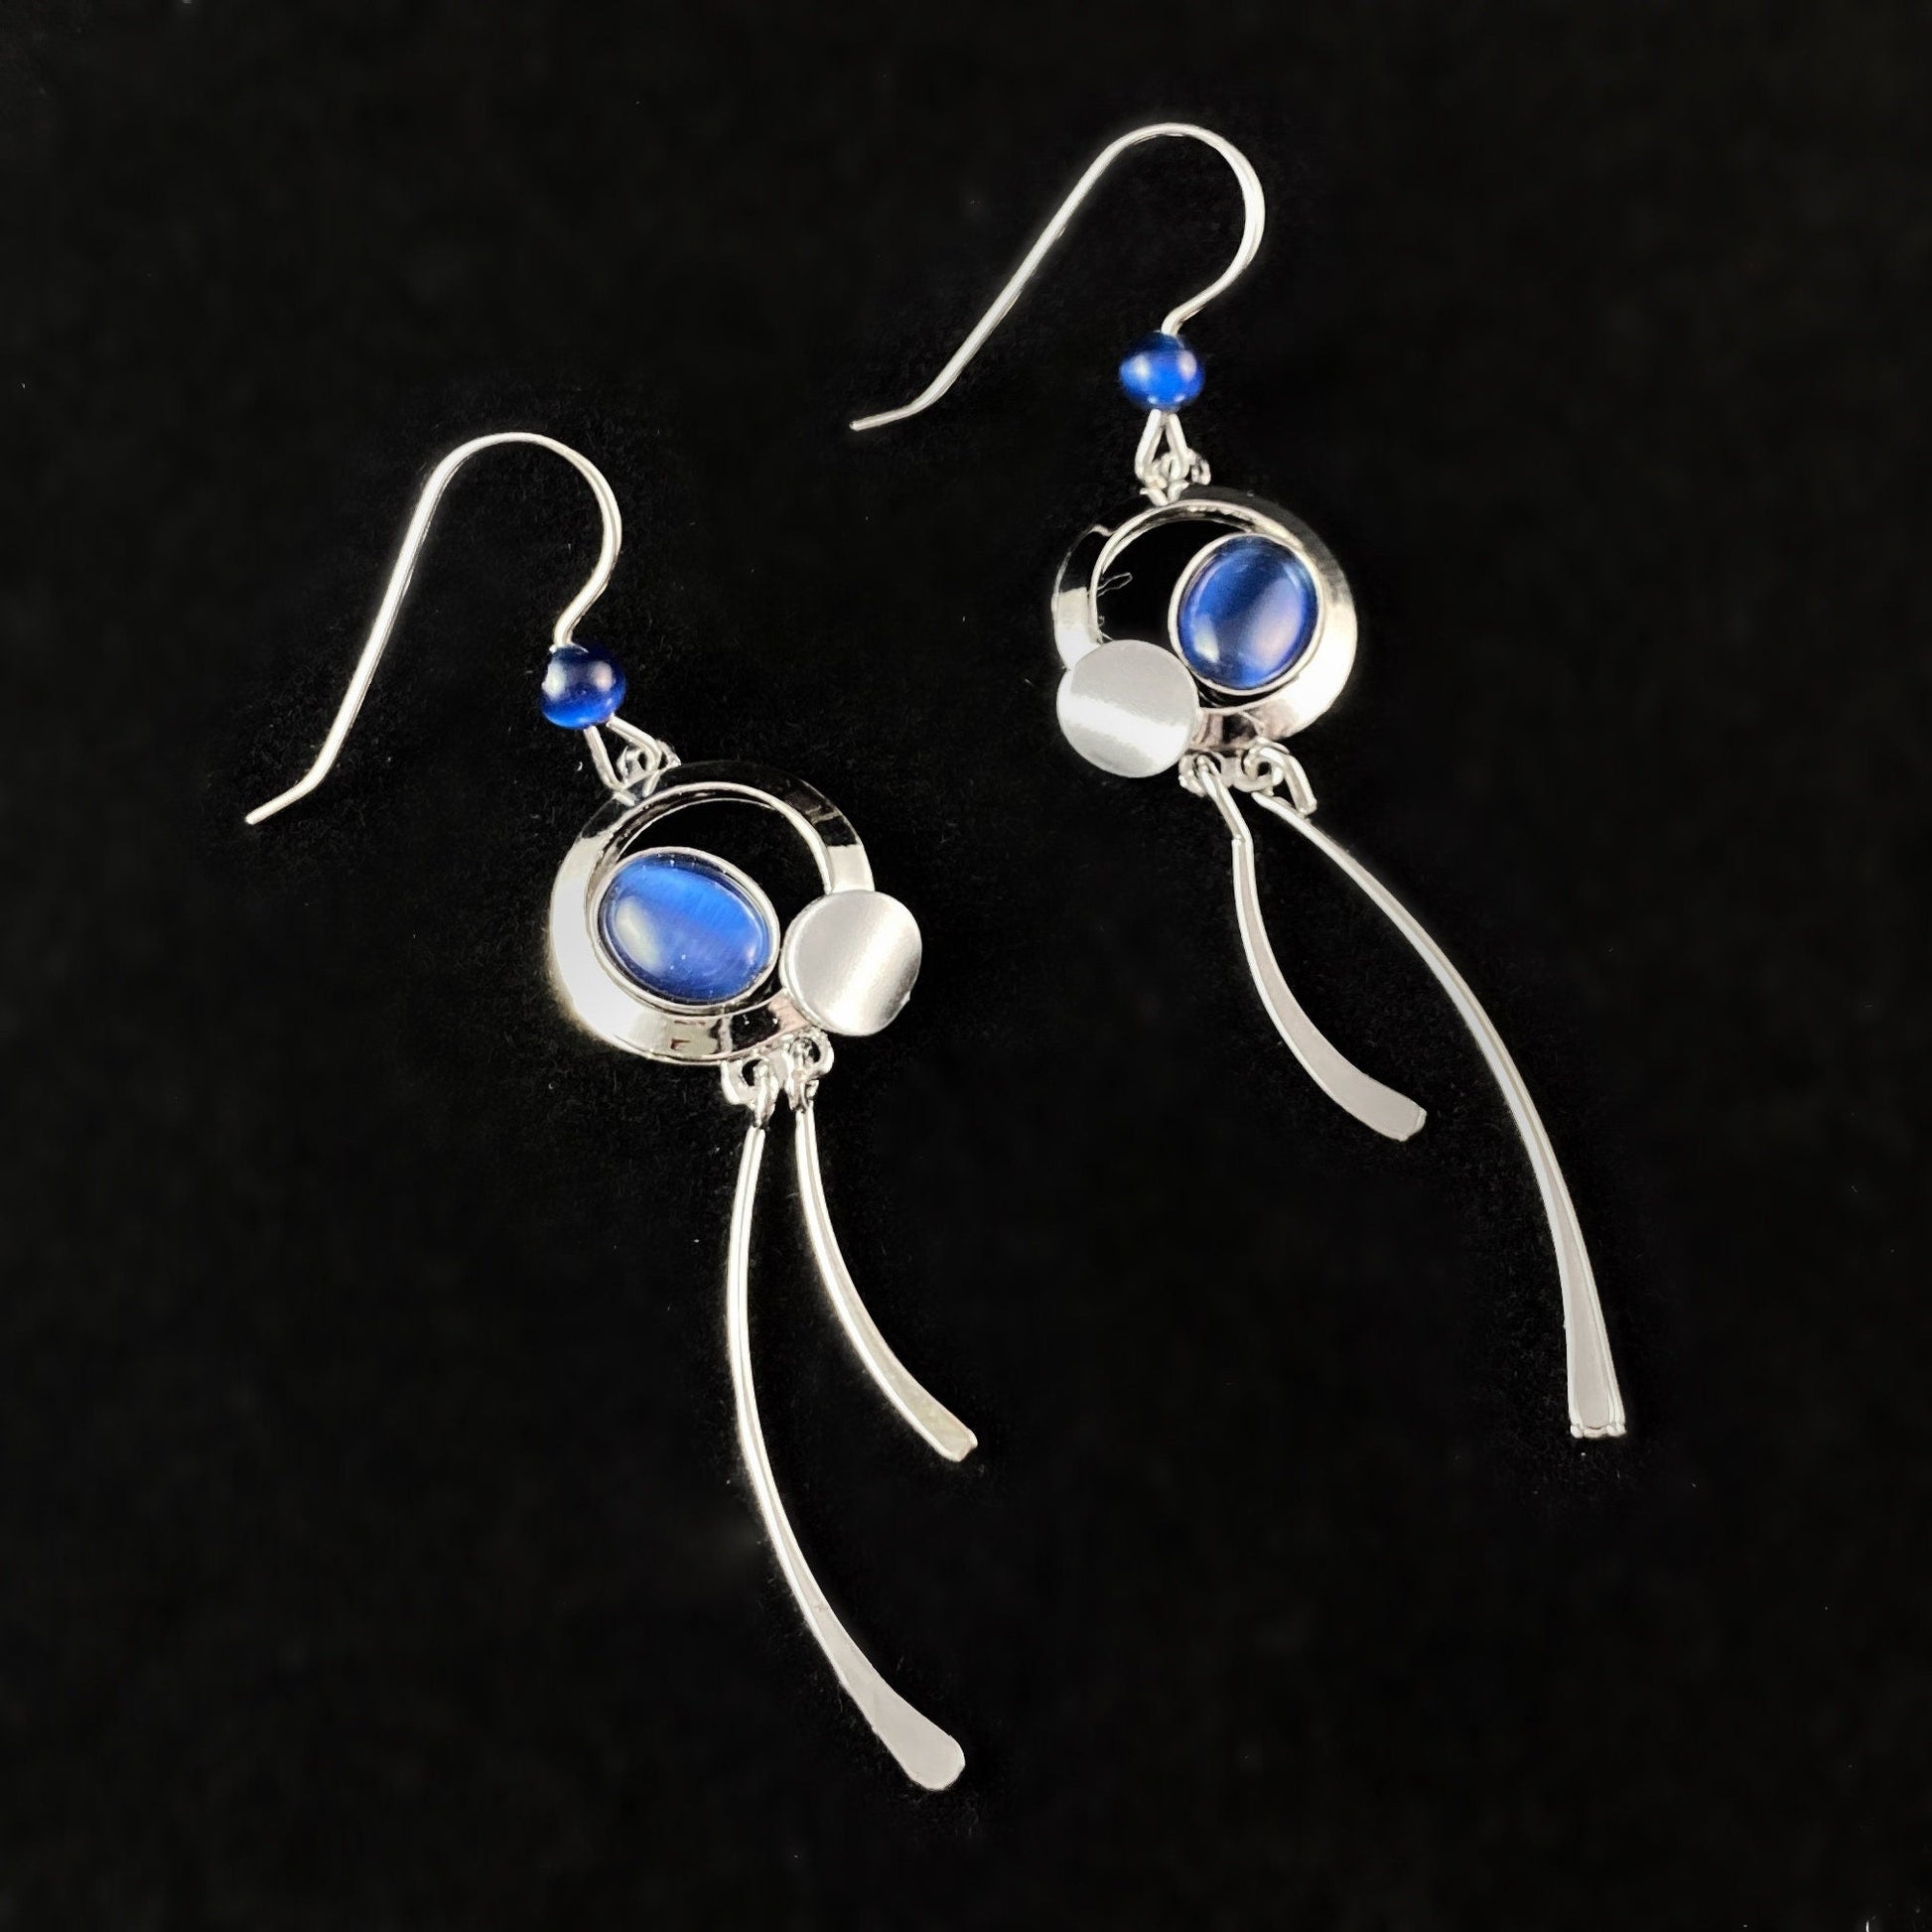 Lightweight Handmade Geometric Aluminum Earrings, Silver and Blue Circles